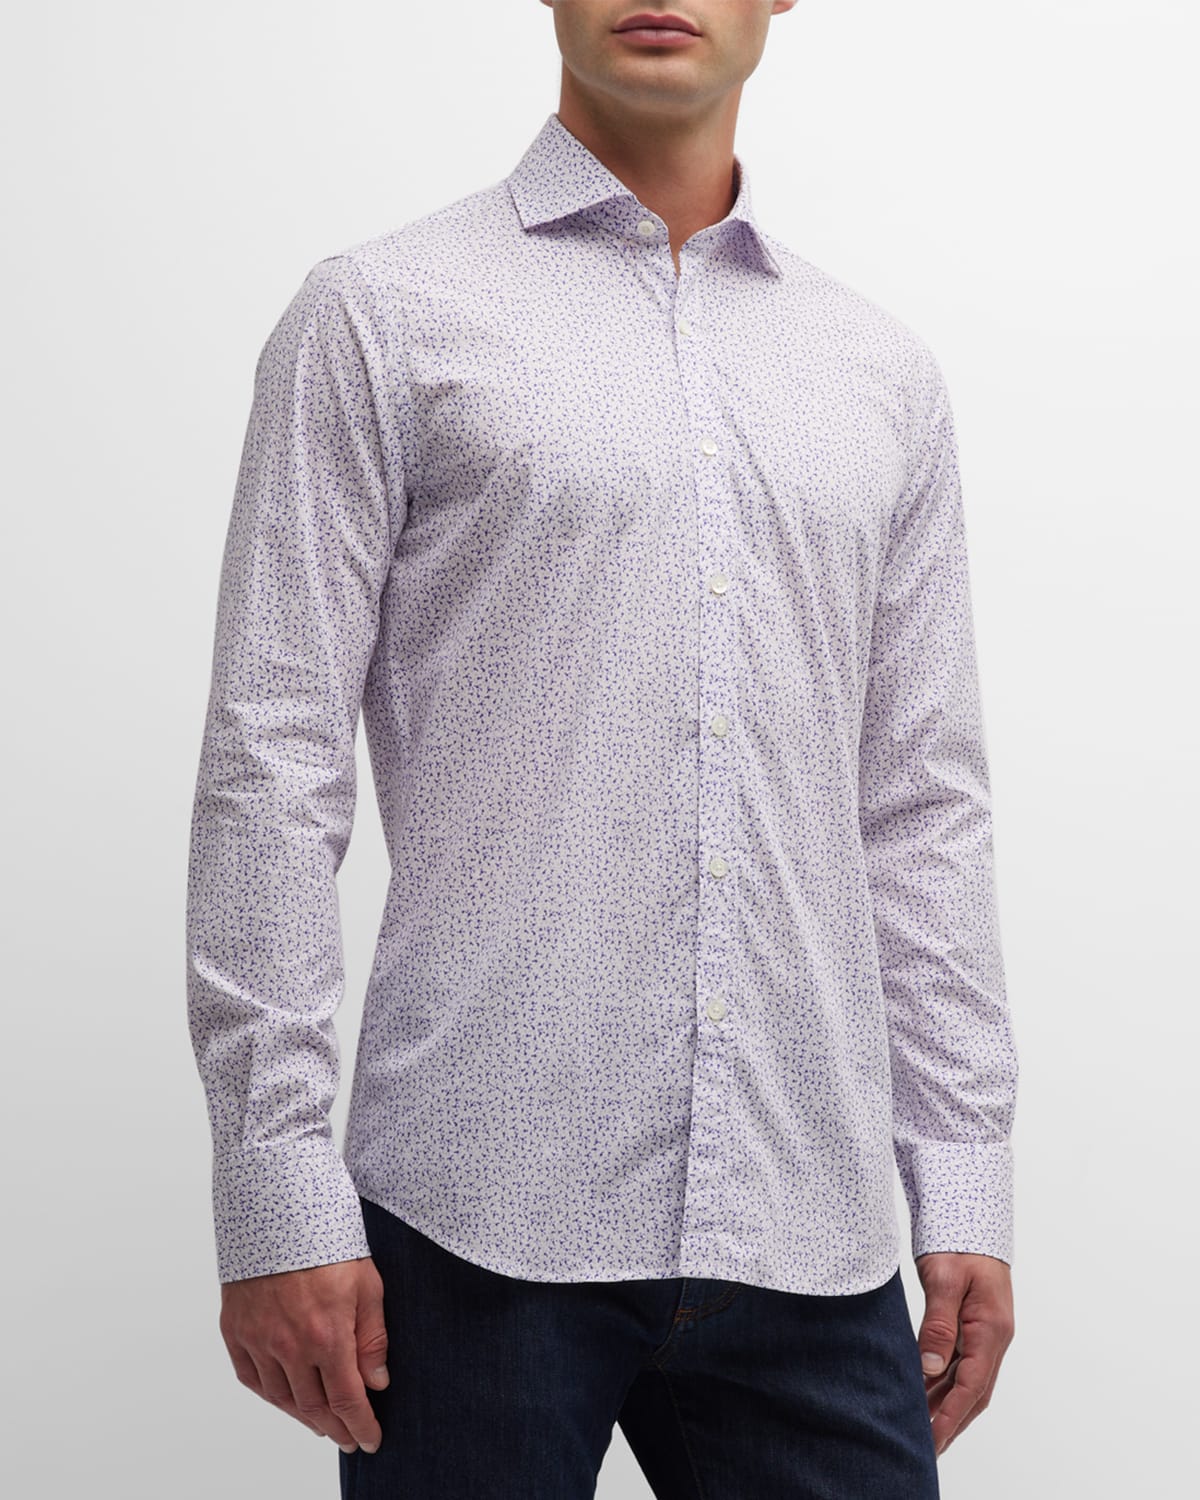 Canali Men's Micro-printed Sport Shirt In Purple